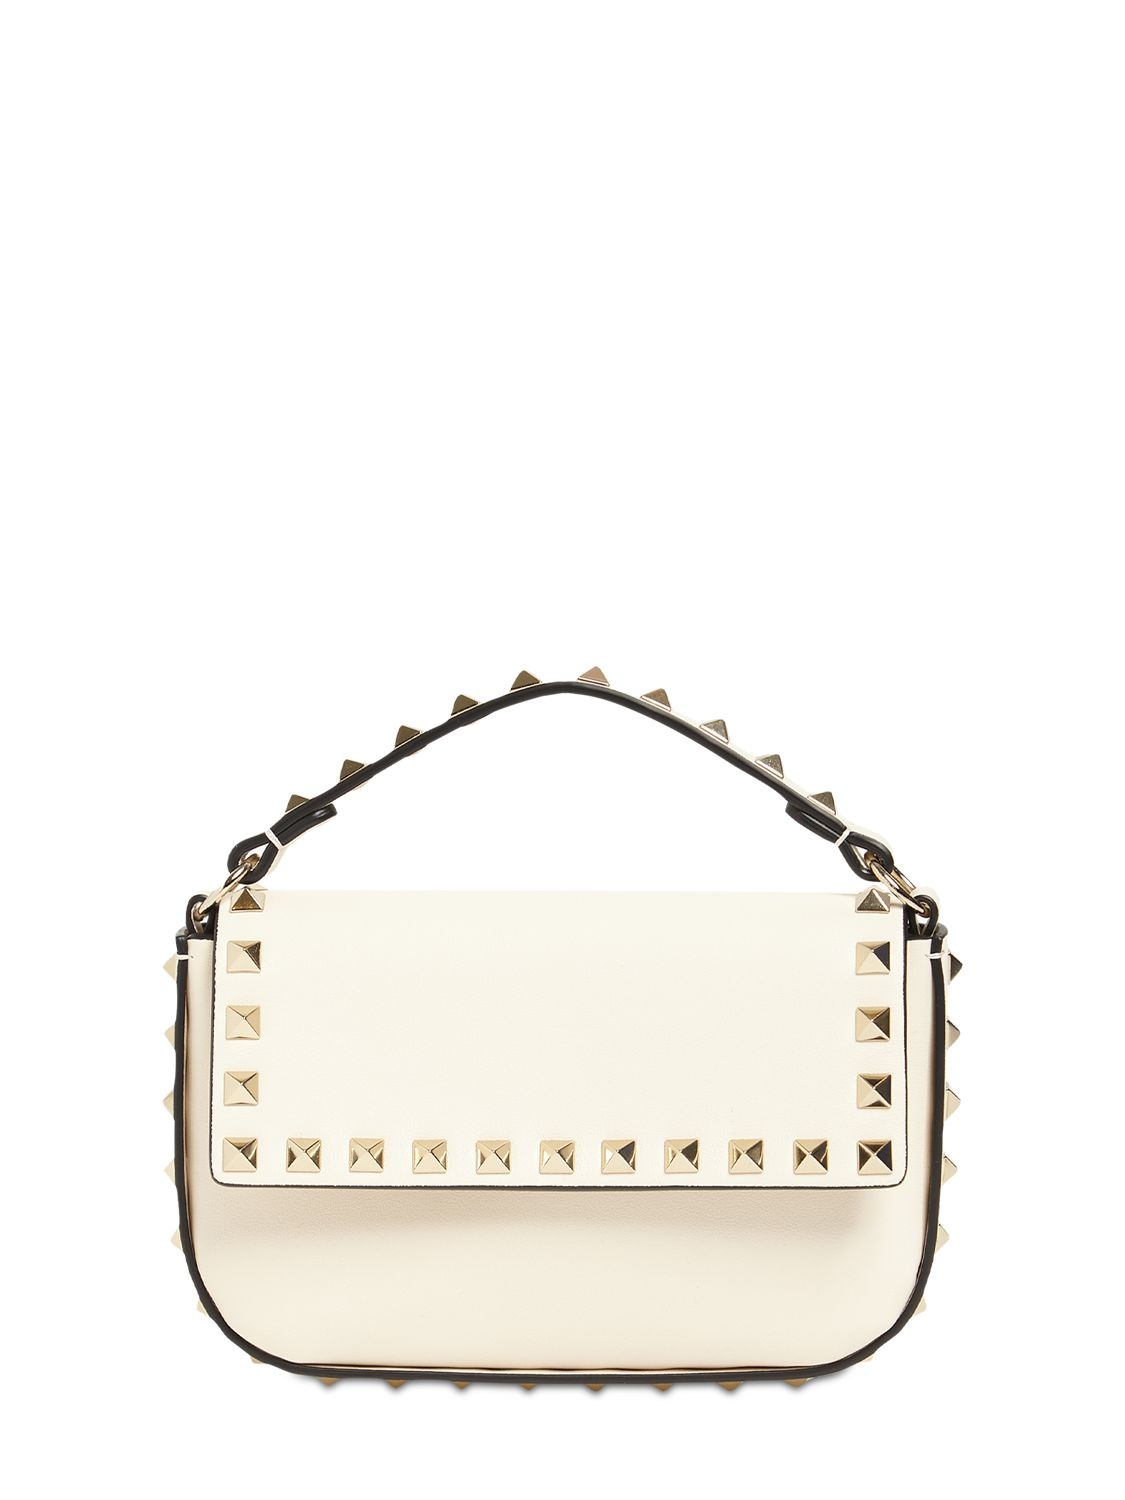 Valentino Garavani Small Leather Rockstud Top Handle Bag In Light Ivory